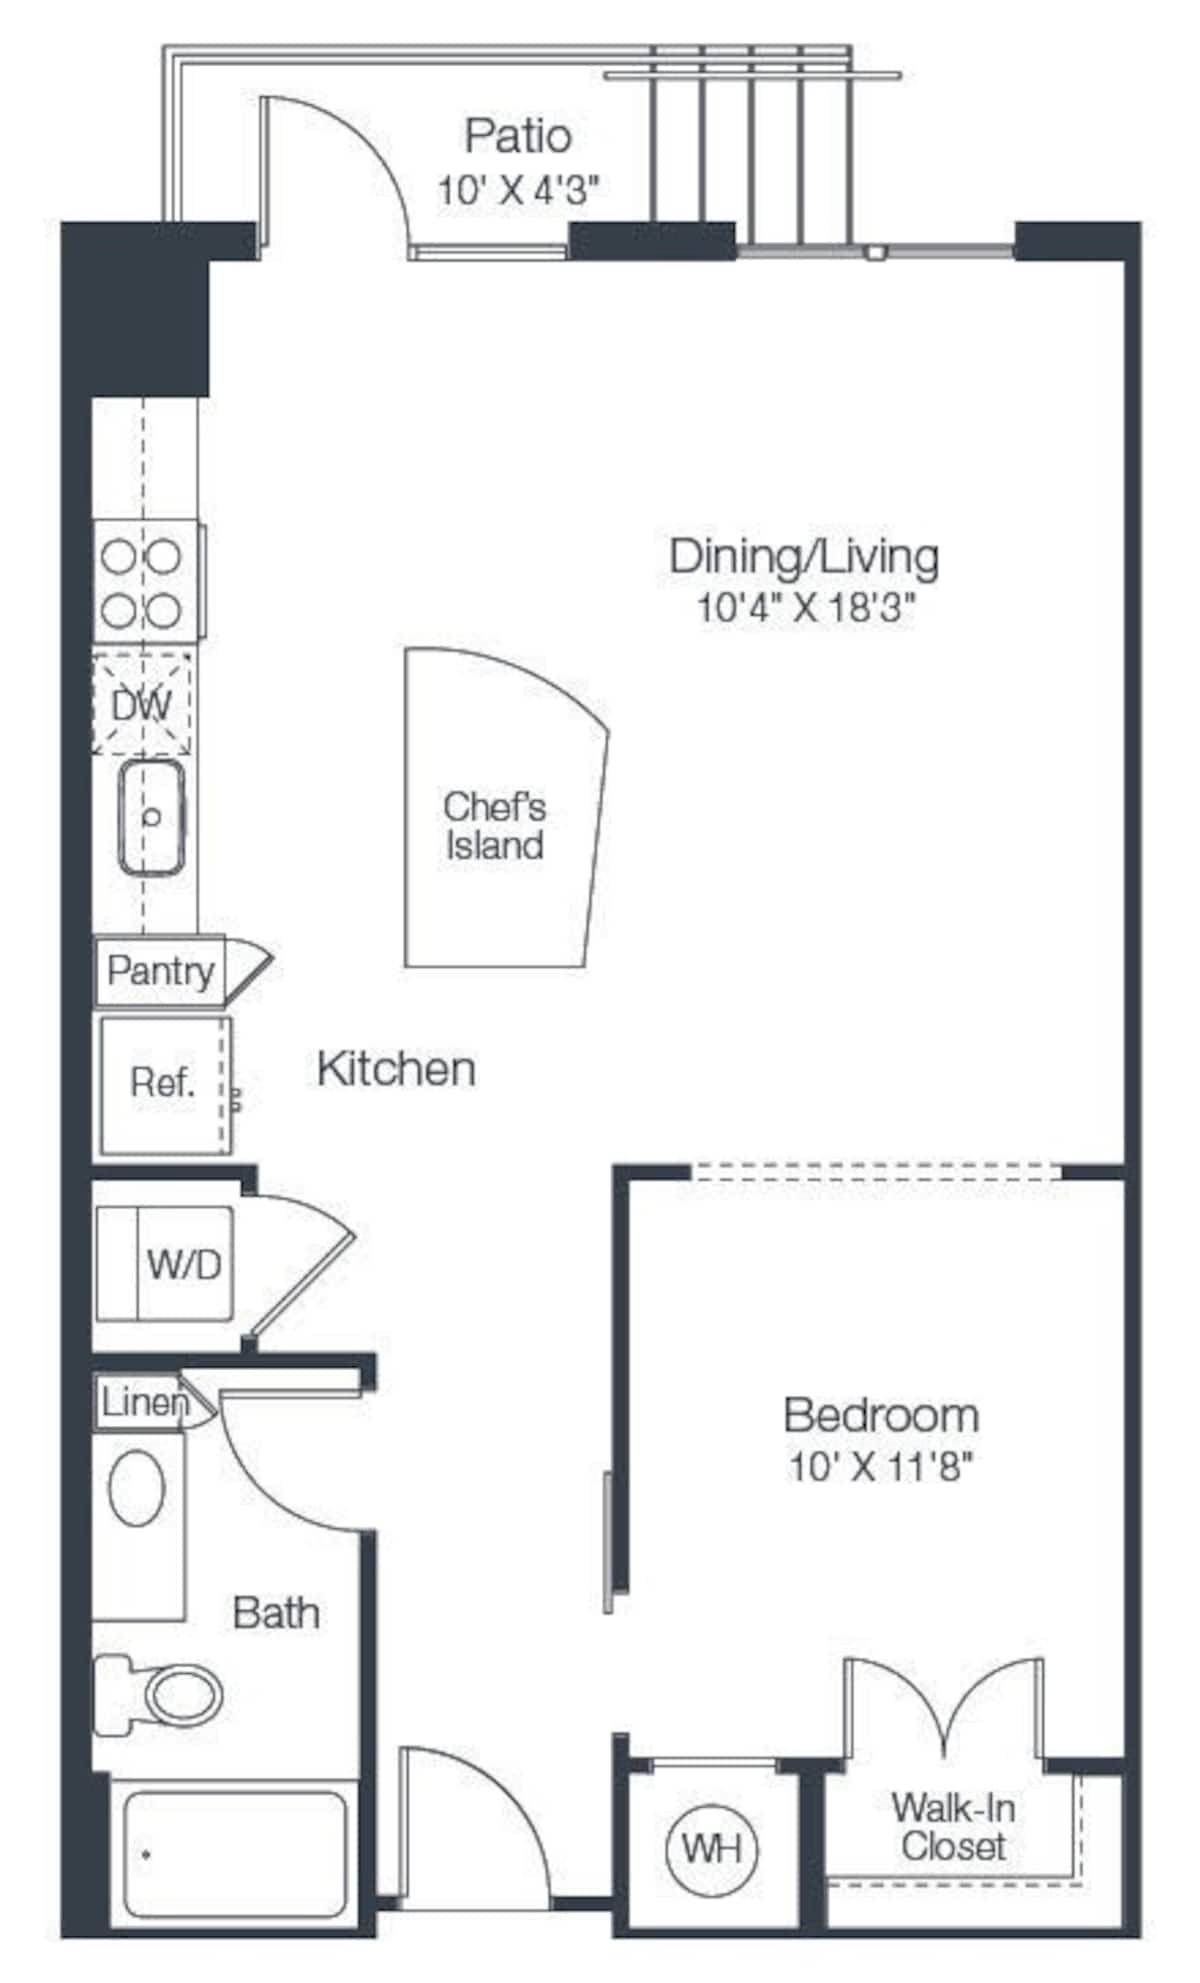 Floorplan diagram for A1c, showing 1 bedroom